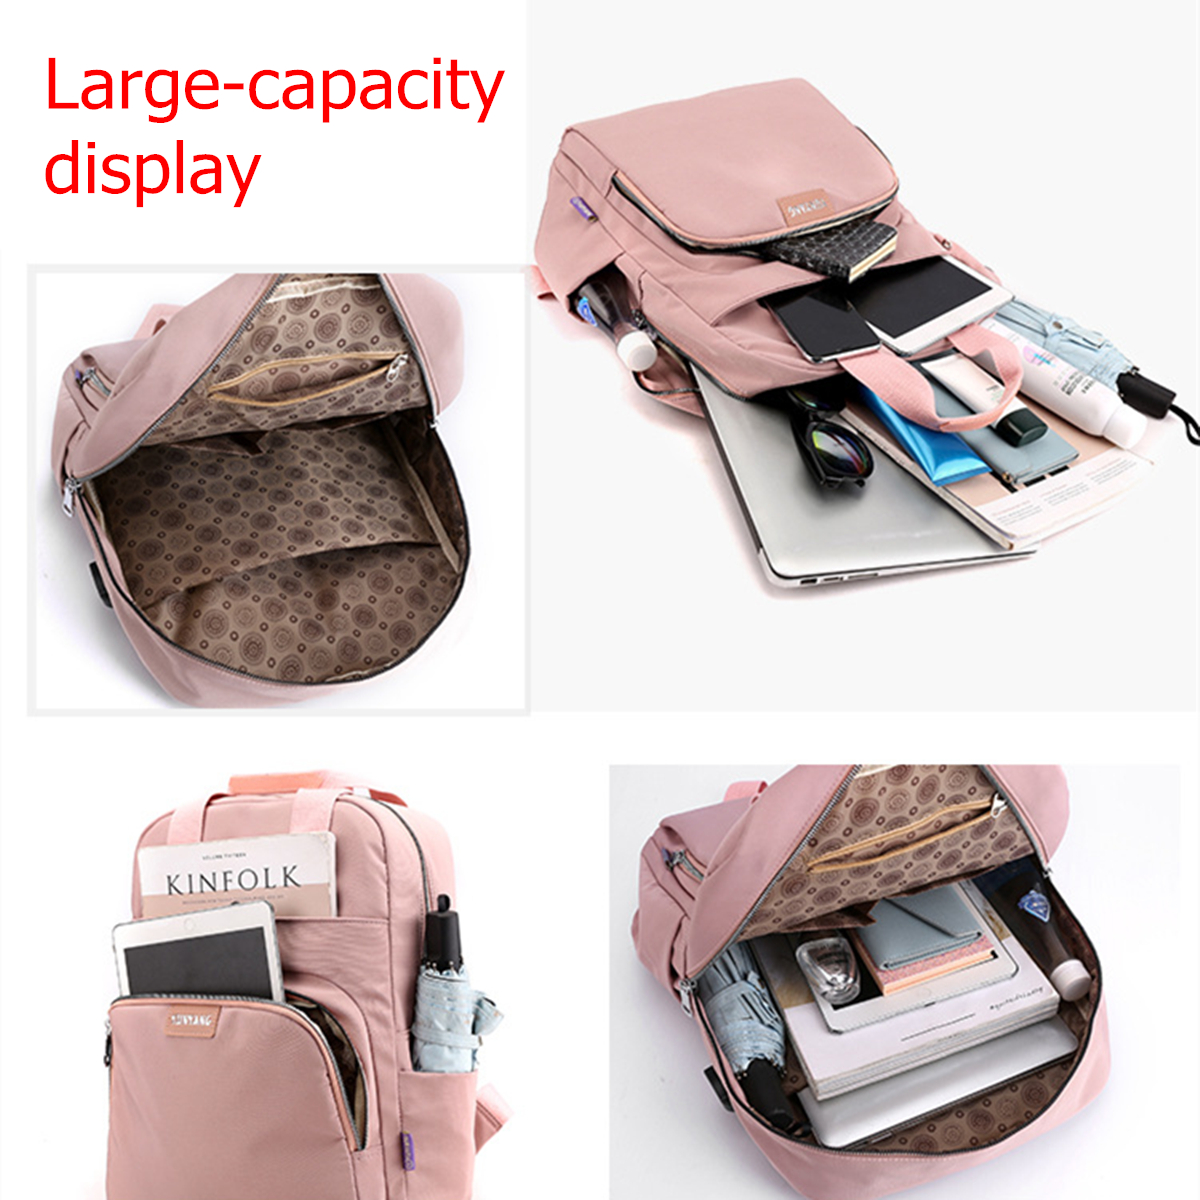 Outdoor-Camping-Women-USB-Charging-Port-Nylon-Backpack-School-Bag-Travel-Rucksack-Laptop-1699005-13